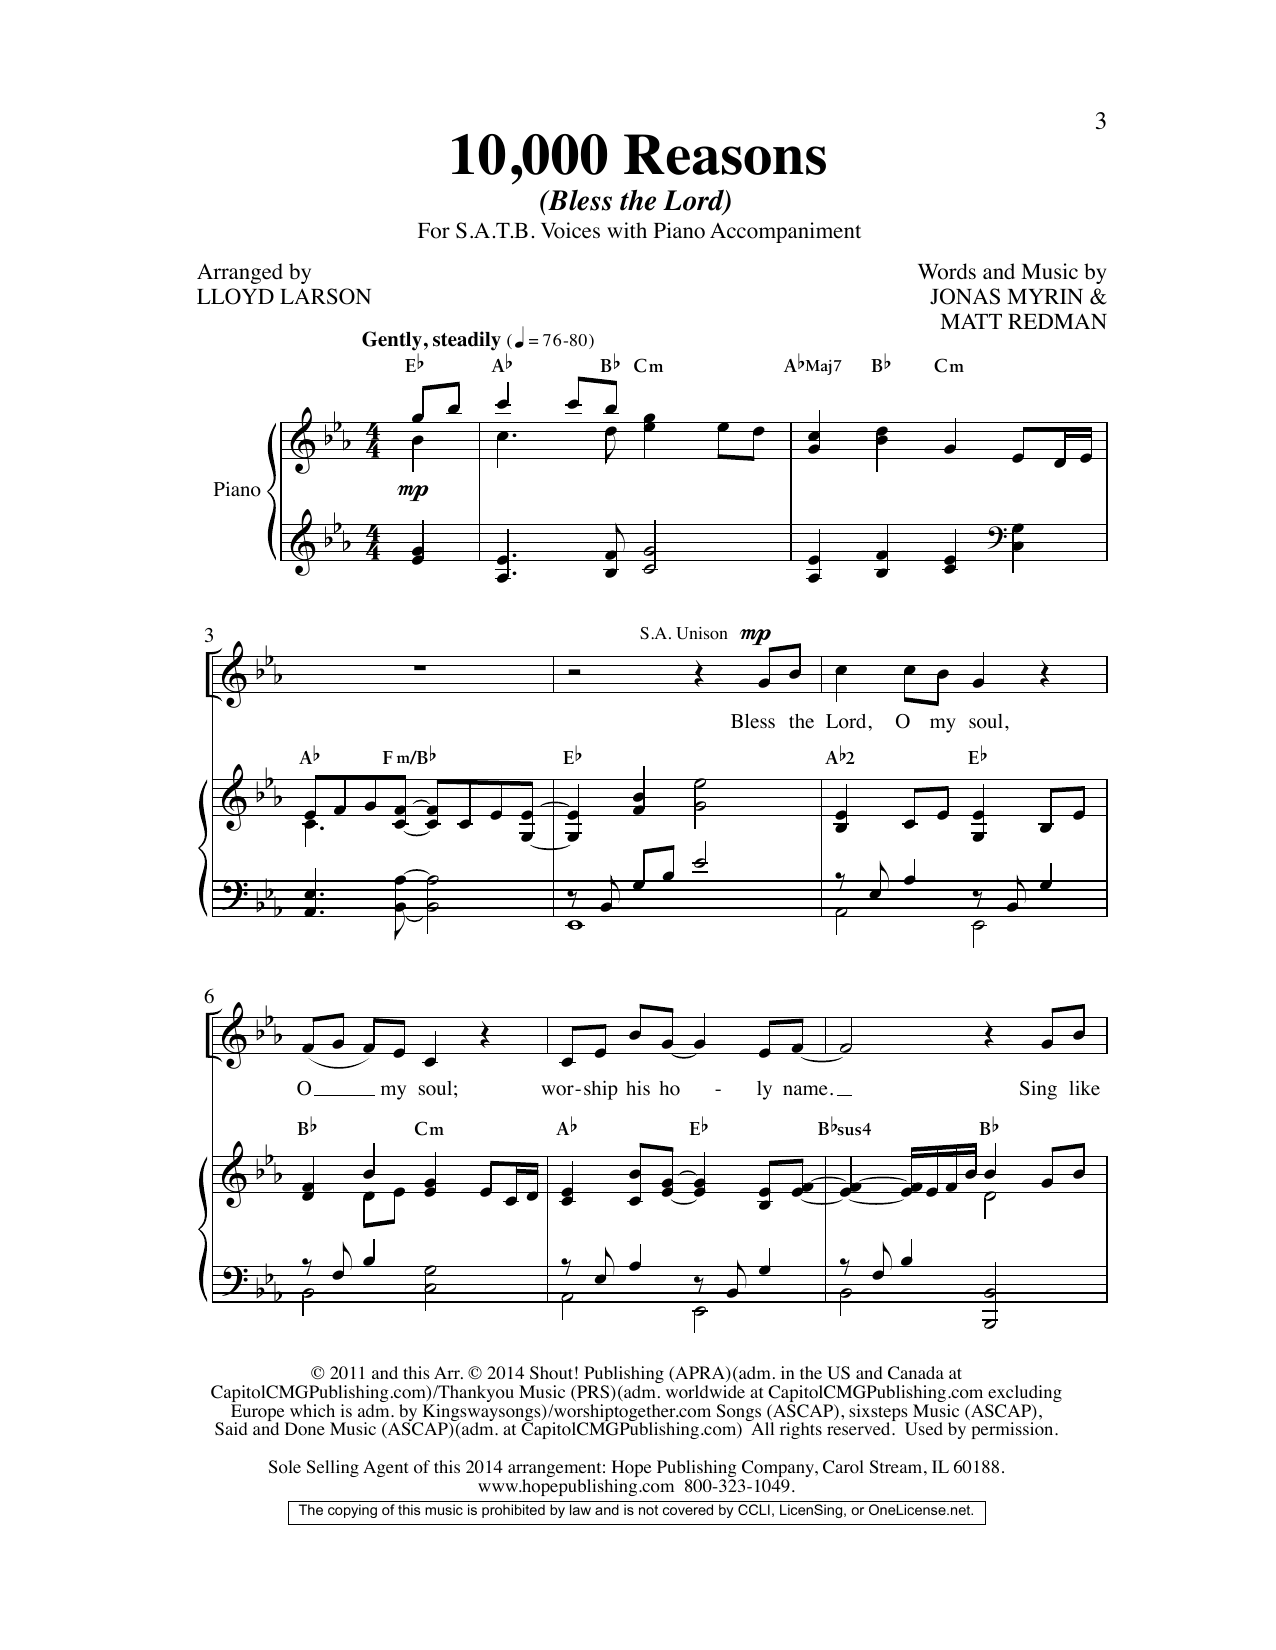 Matt Redman 10,000 Reasons (Bless the Lord) (arr. Lloyd Larson) sheet music notes and chords arranged for SAB Choir